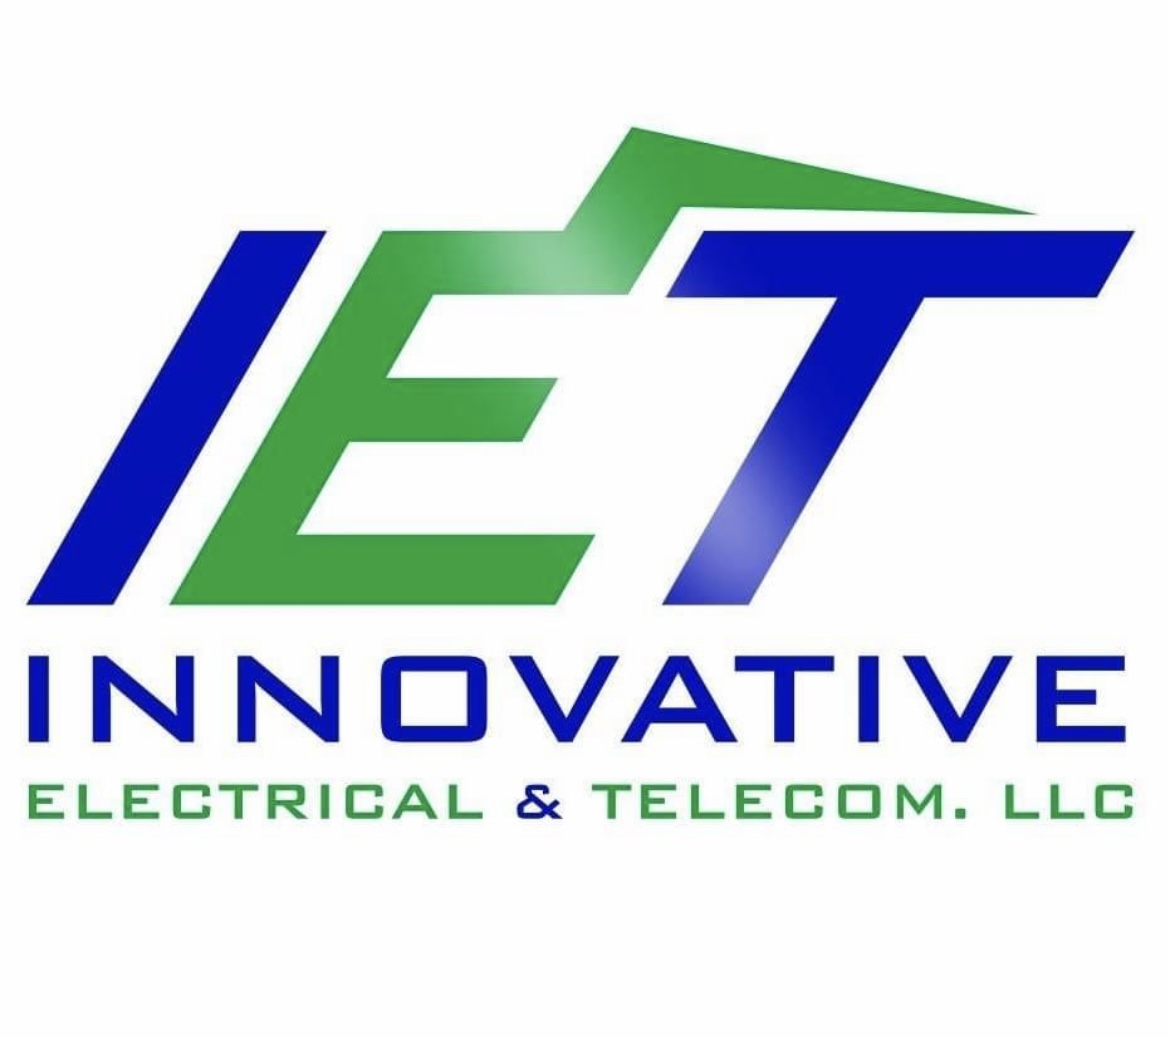 Innovative Electrical & Telecom, LLC Logo